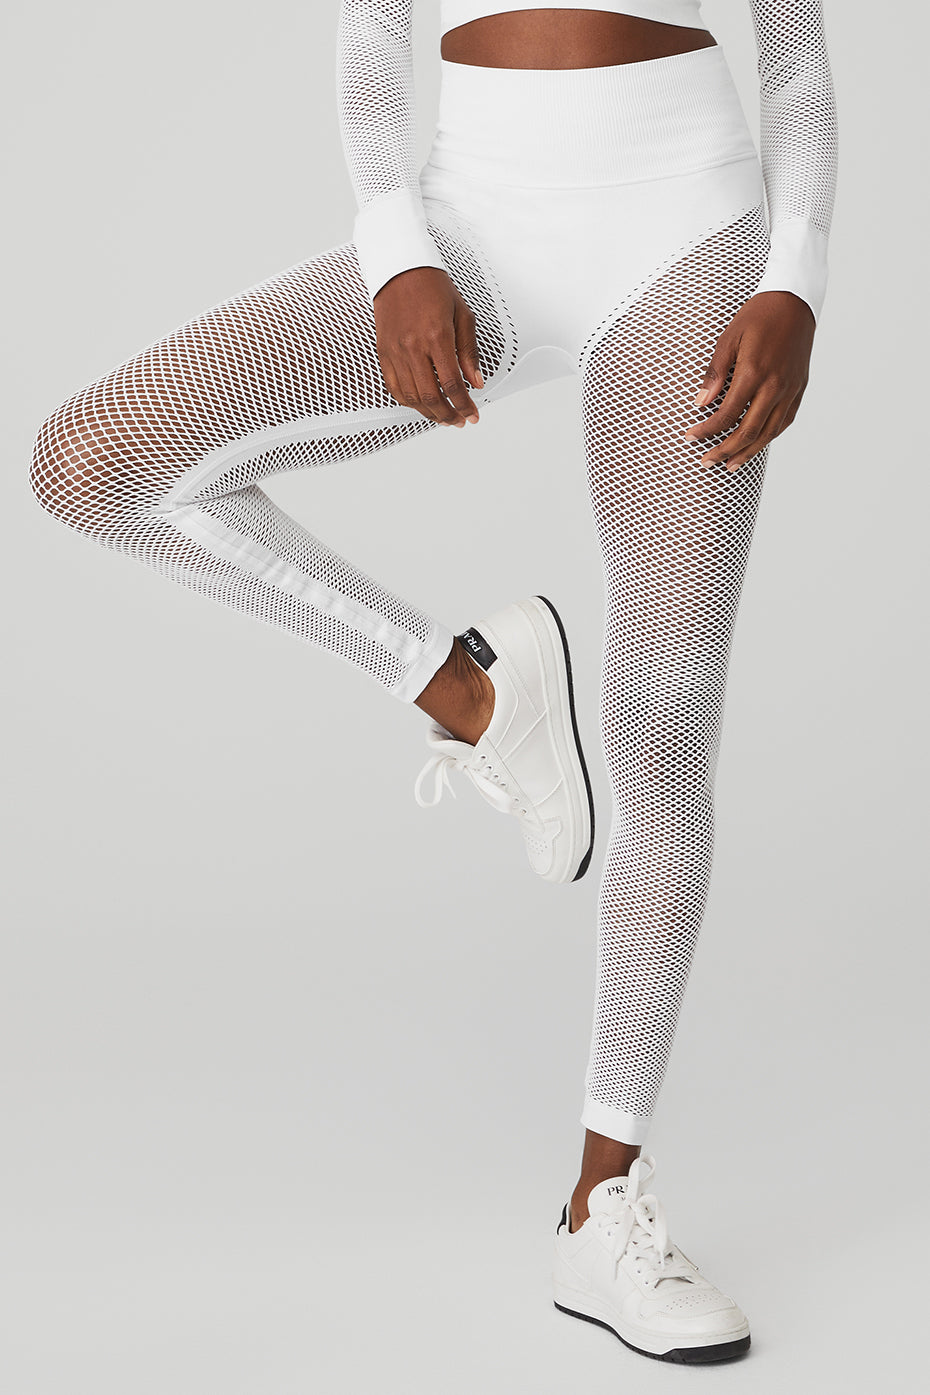 Alo Yoga Alo White Camo Leggings Size M - $41 (67% Off Retail